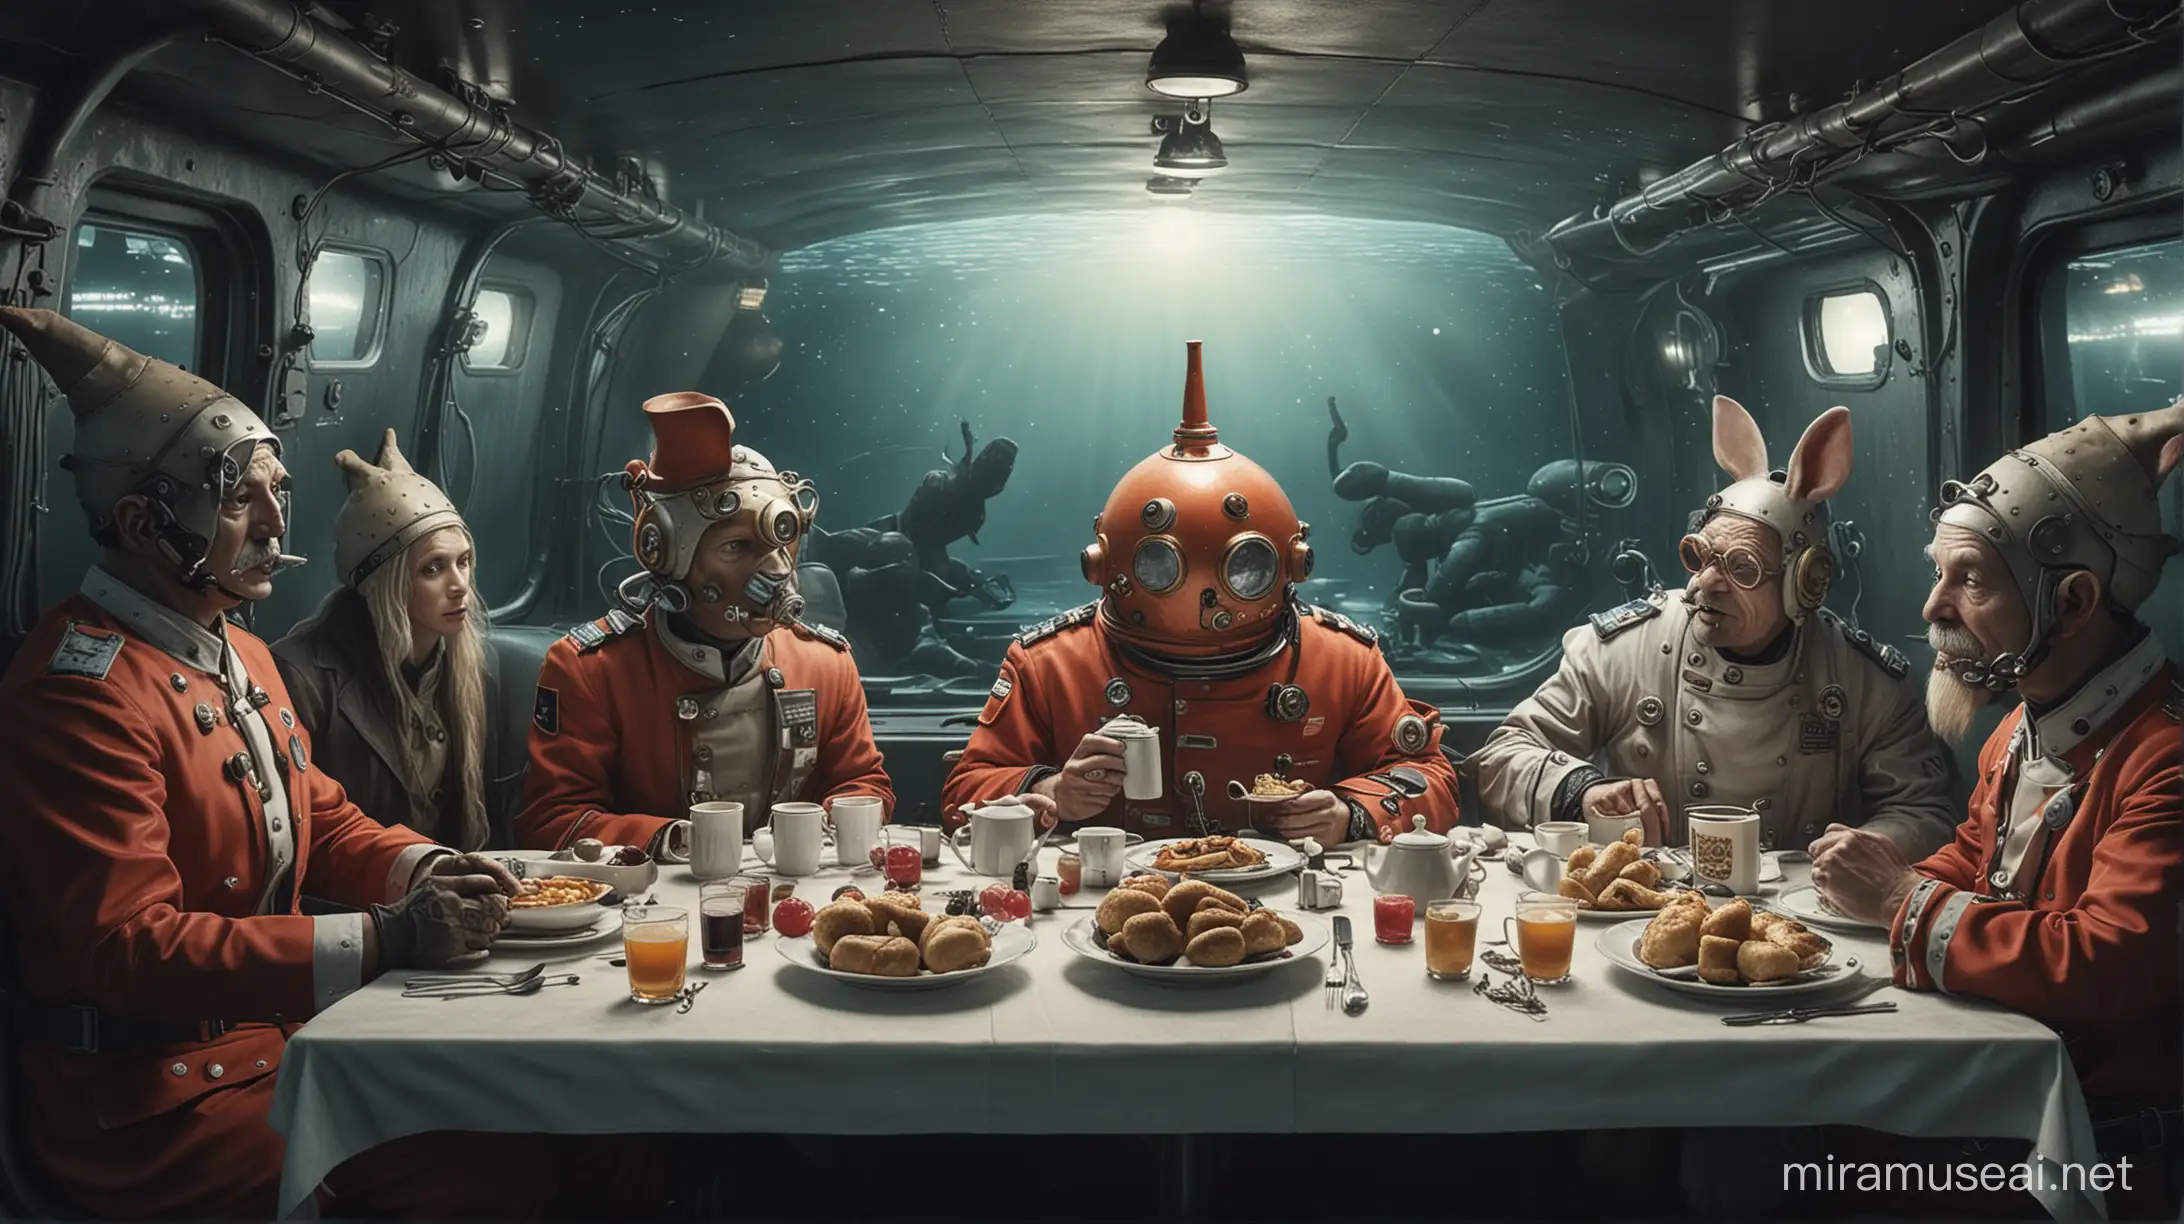 Surreal Tea Party in Secret Sonderland Firemans Supper Club Submarine